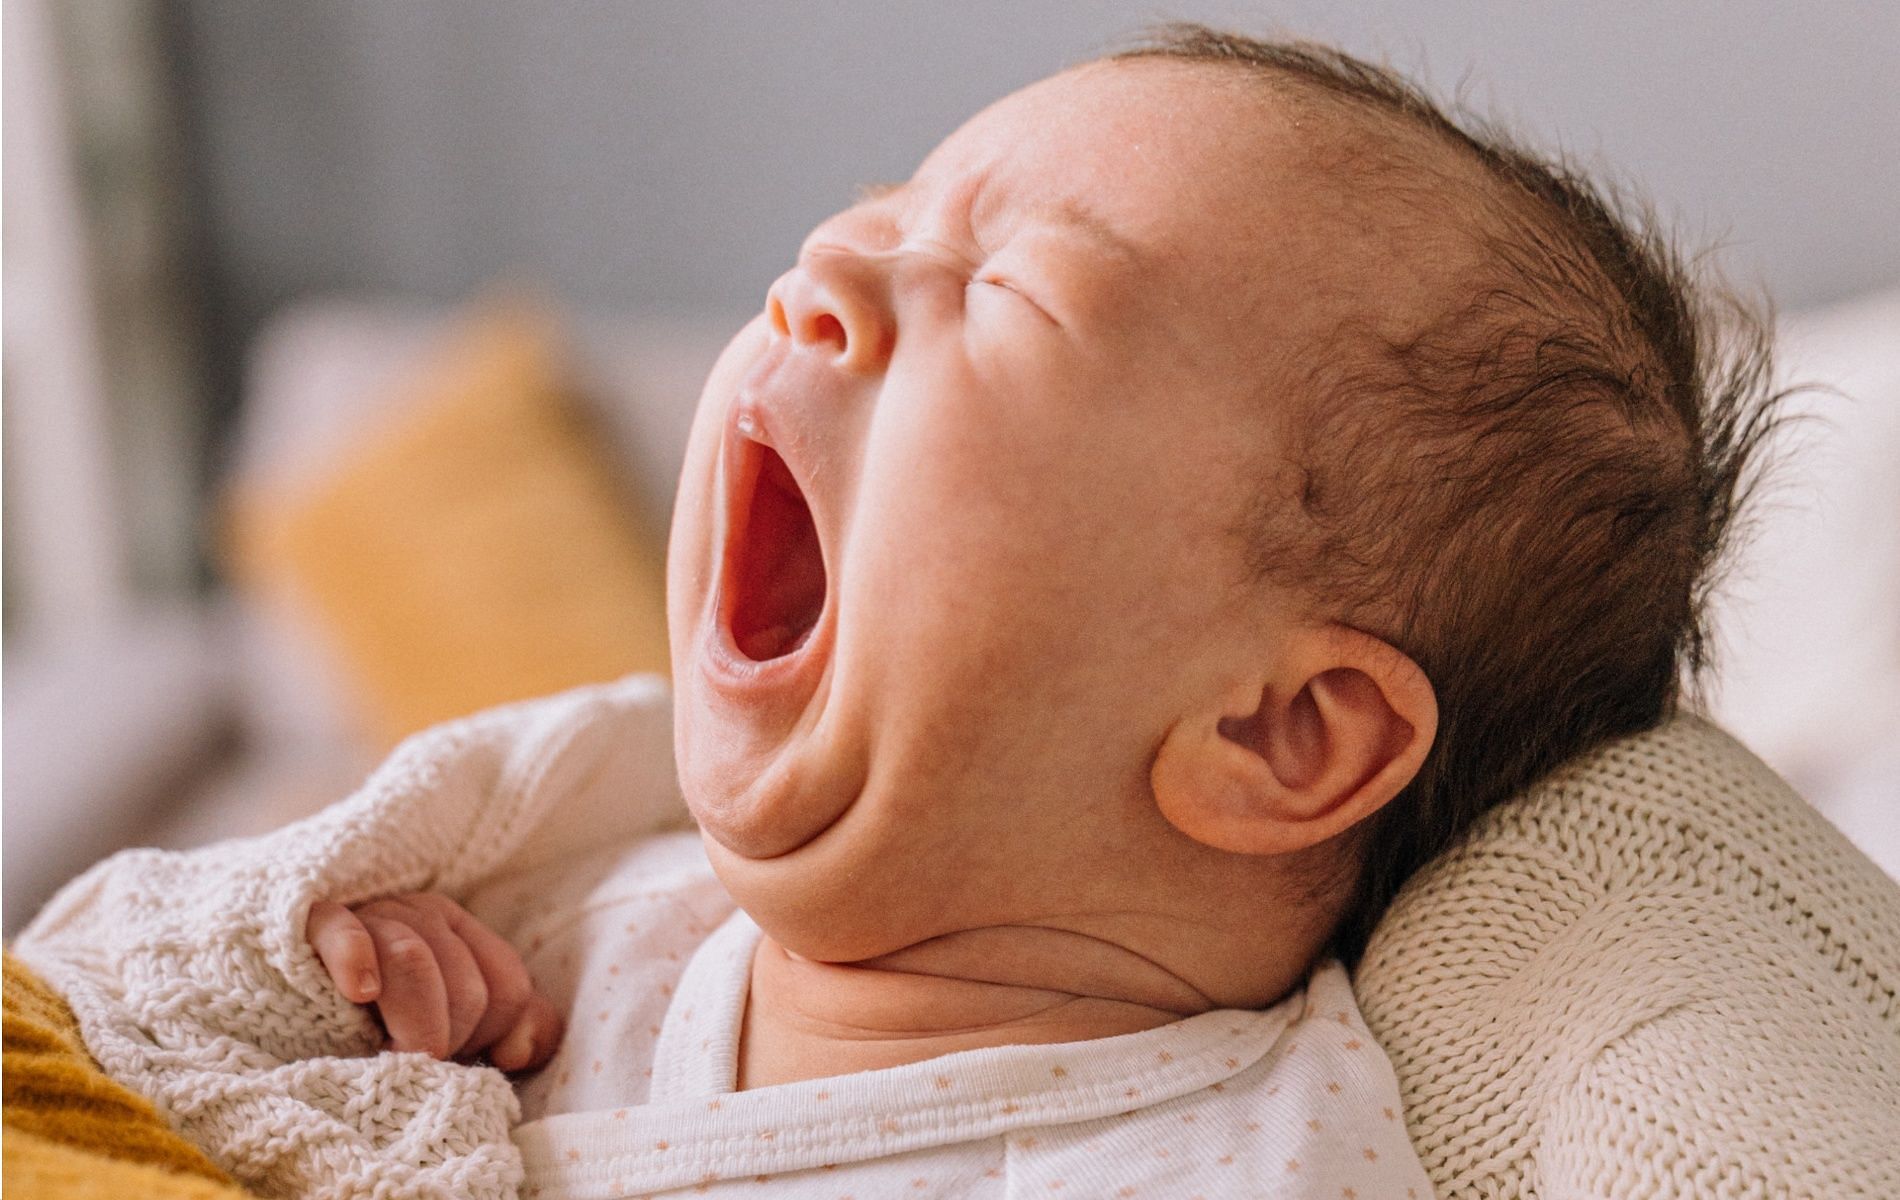 Why is yawning contagious? (Image via Antoni Shkraba via Pexels)